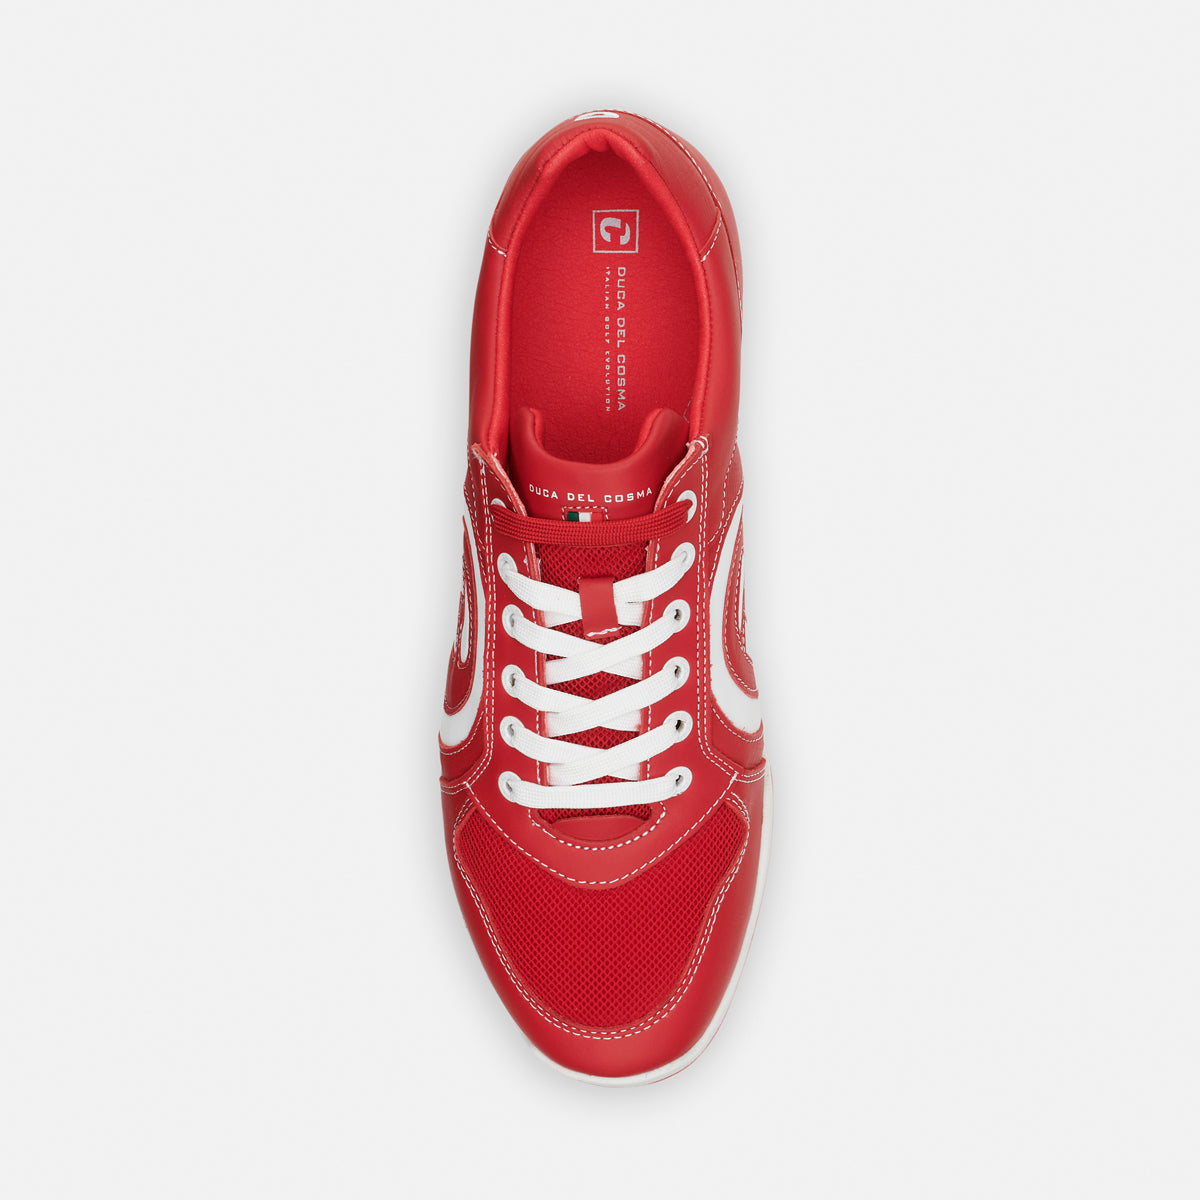 Kuba 2.0 - Red Men's Golf Shoes